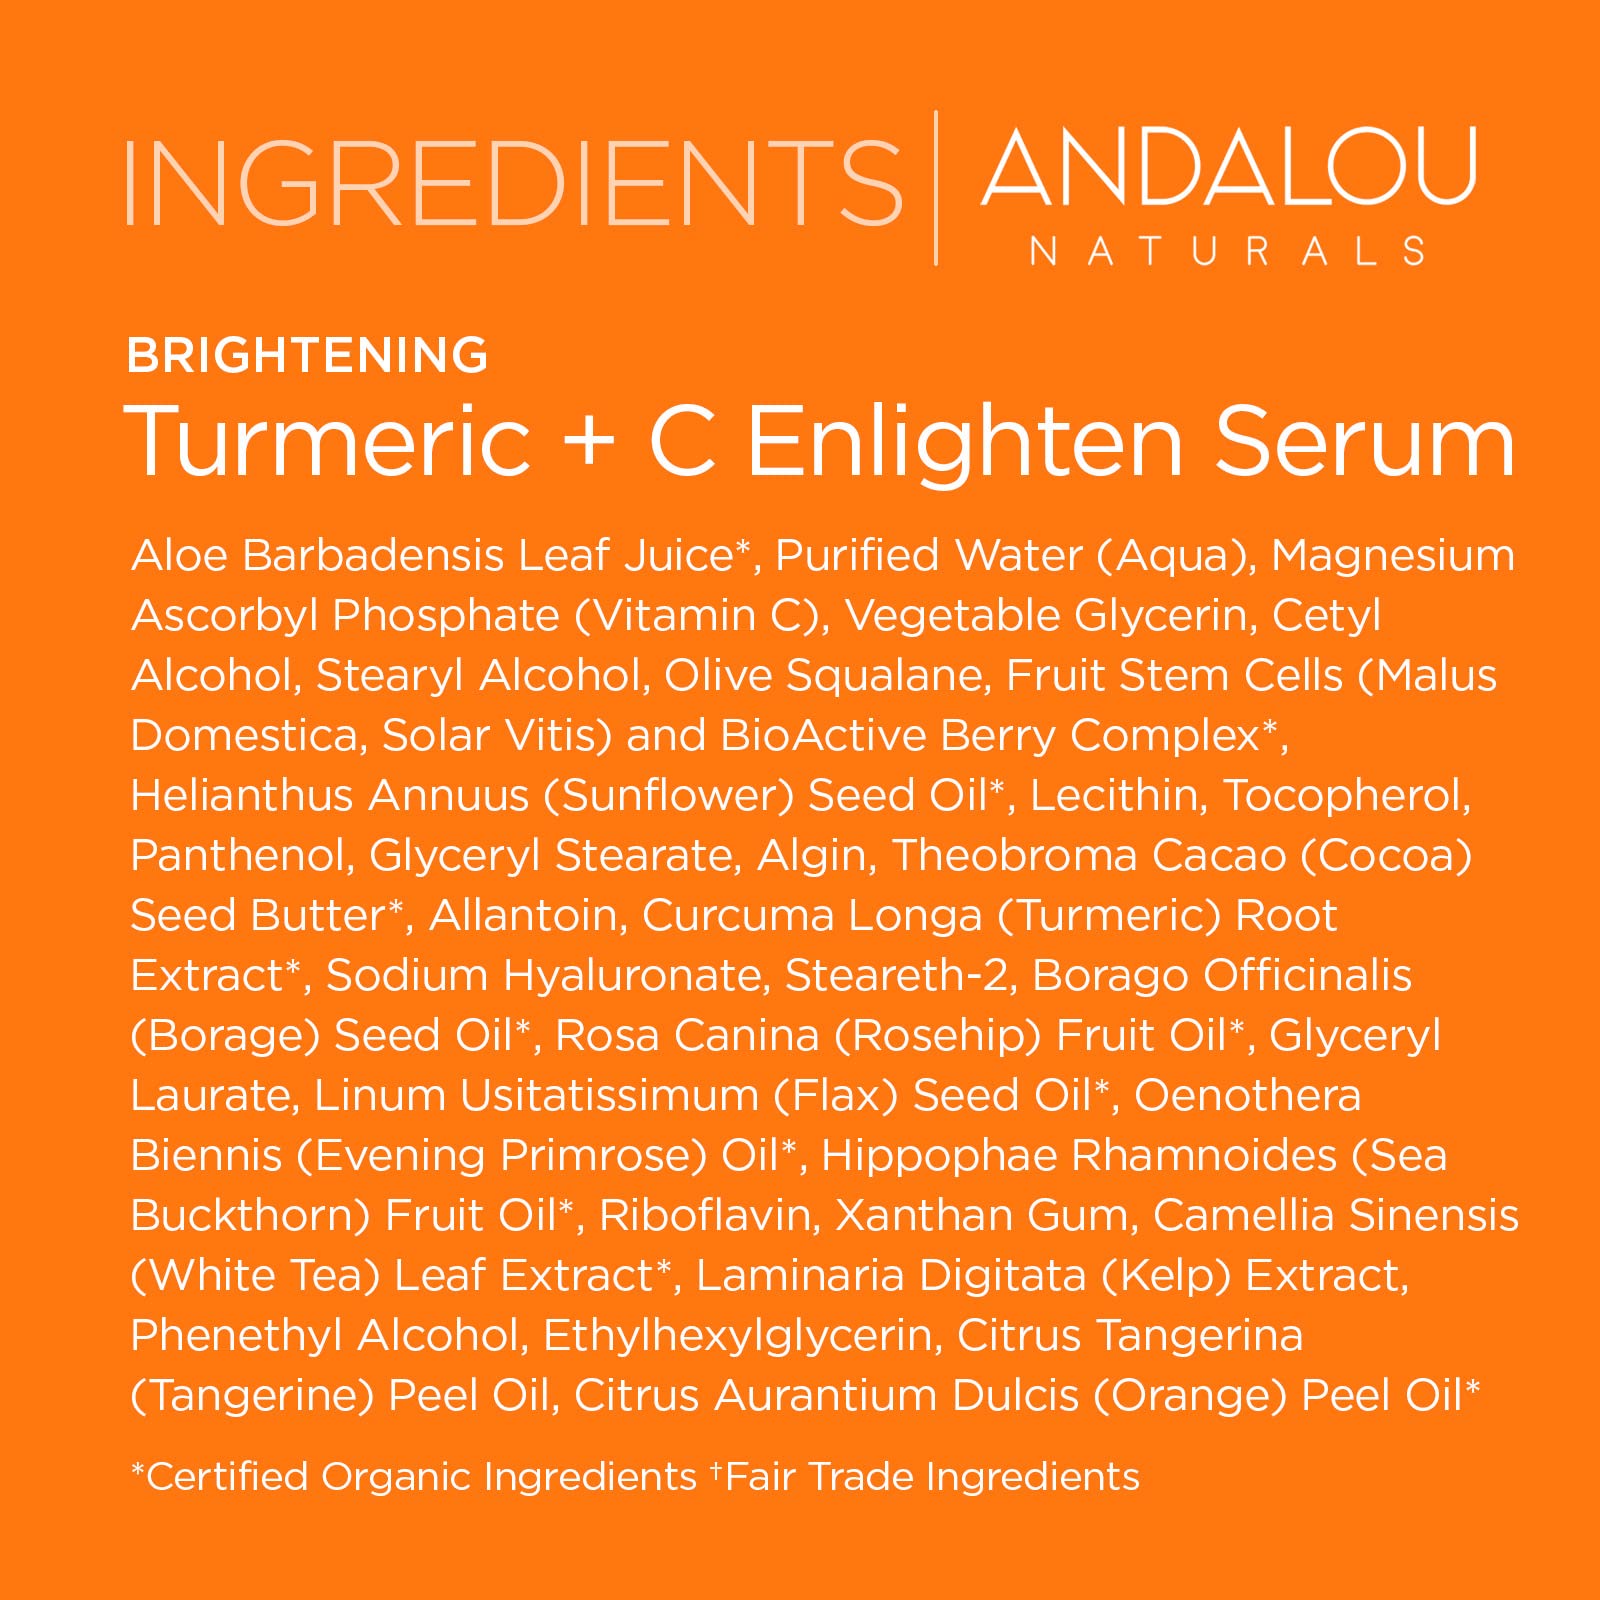 Andalou Naturals Turmeric + C Enlighten Serum, Skin Brightening Serum with Vitamin C & Turmeric, Anti Aging Skin Care, Diminish Sun Damage and Lighten Skin, 1.1 Fl Oz